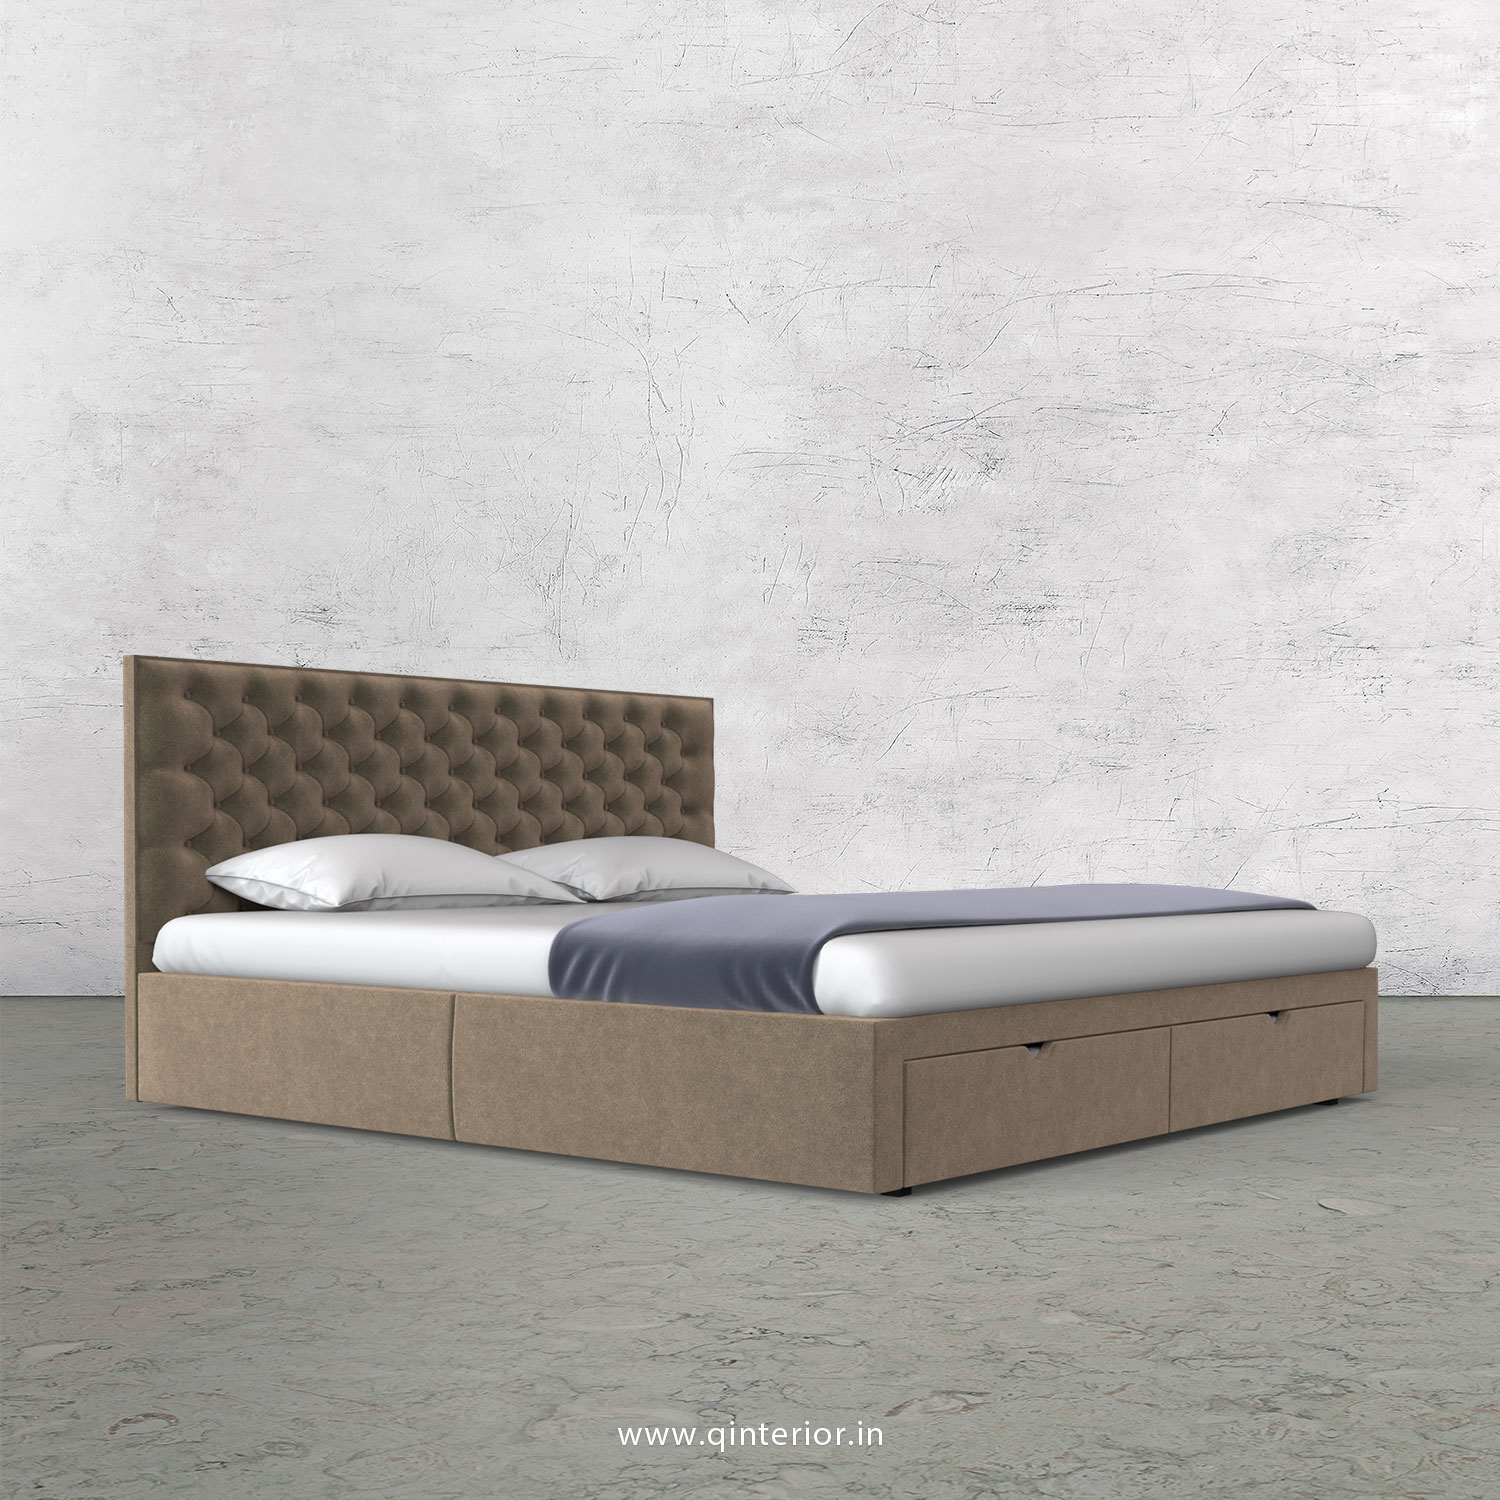 Orion King Size Storage Bed in Velvet Fabric - KBD001 VL11